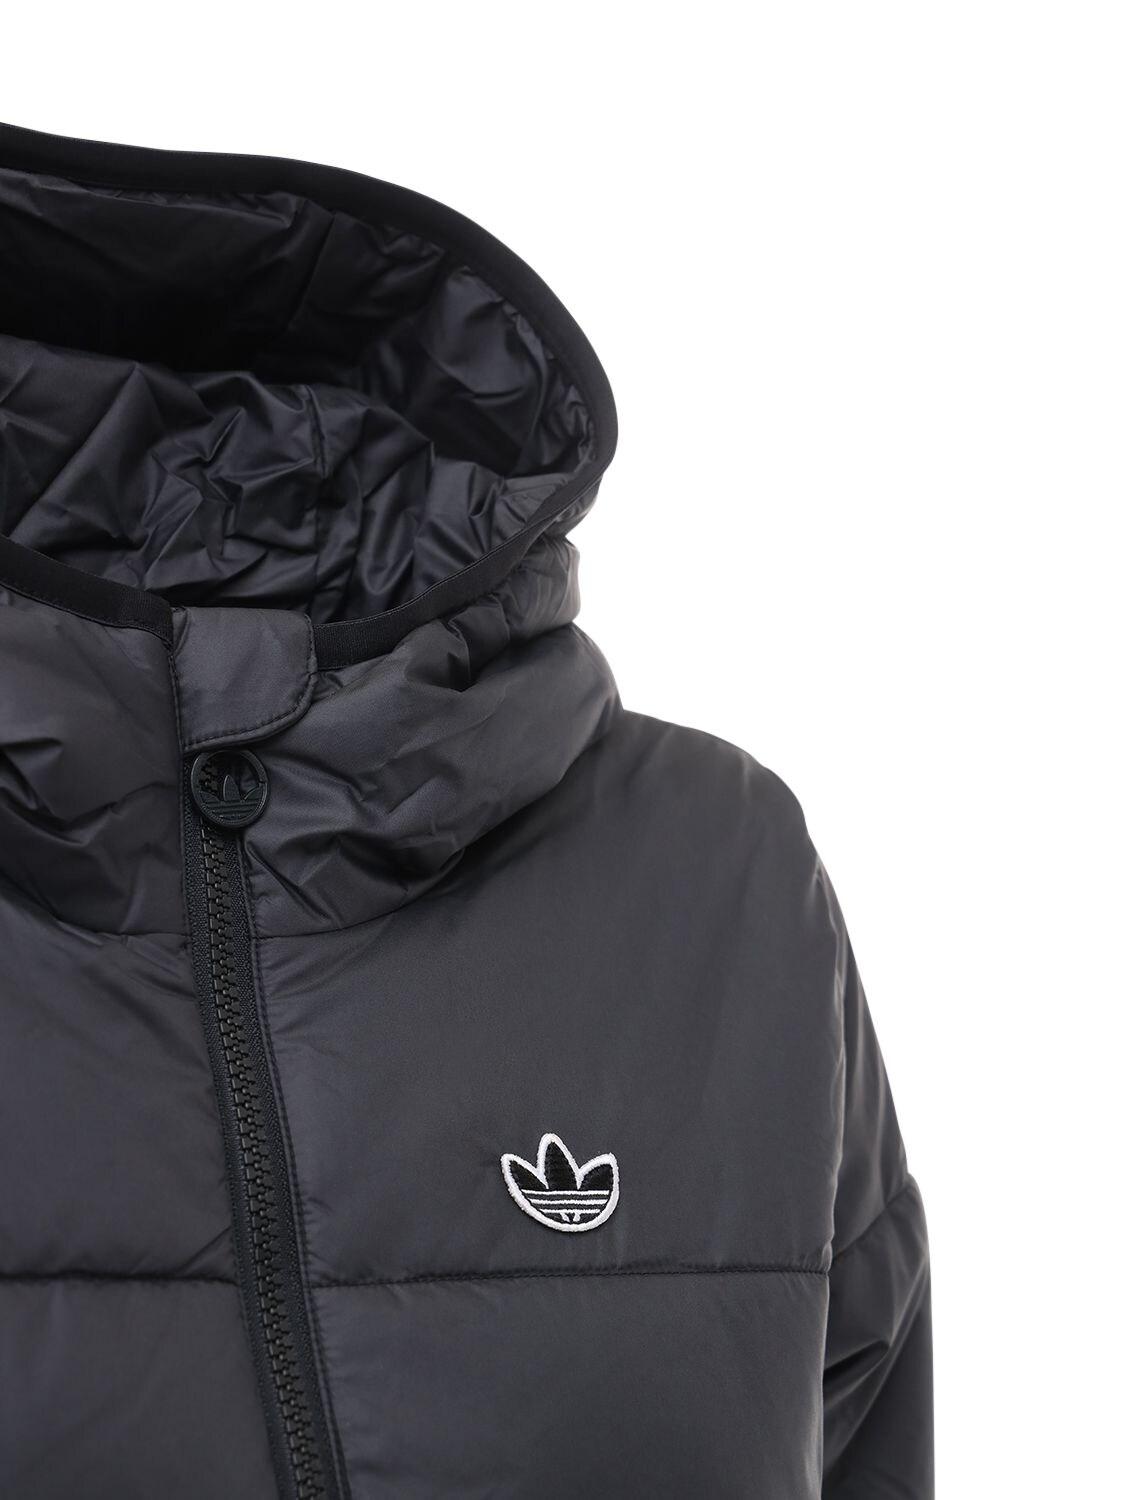 adidas Originals Slim Tech Hooded Jacket in Black - Lyst